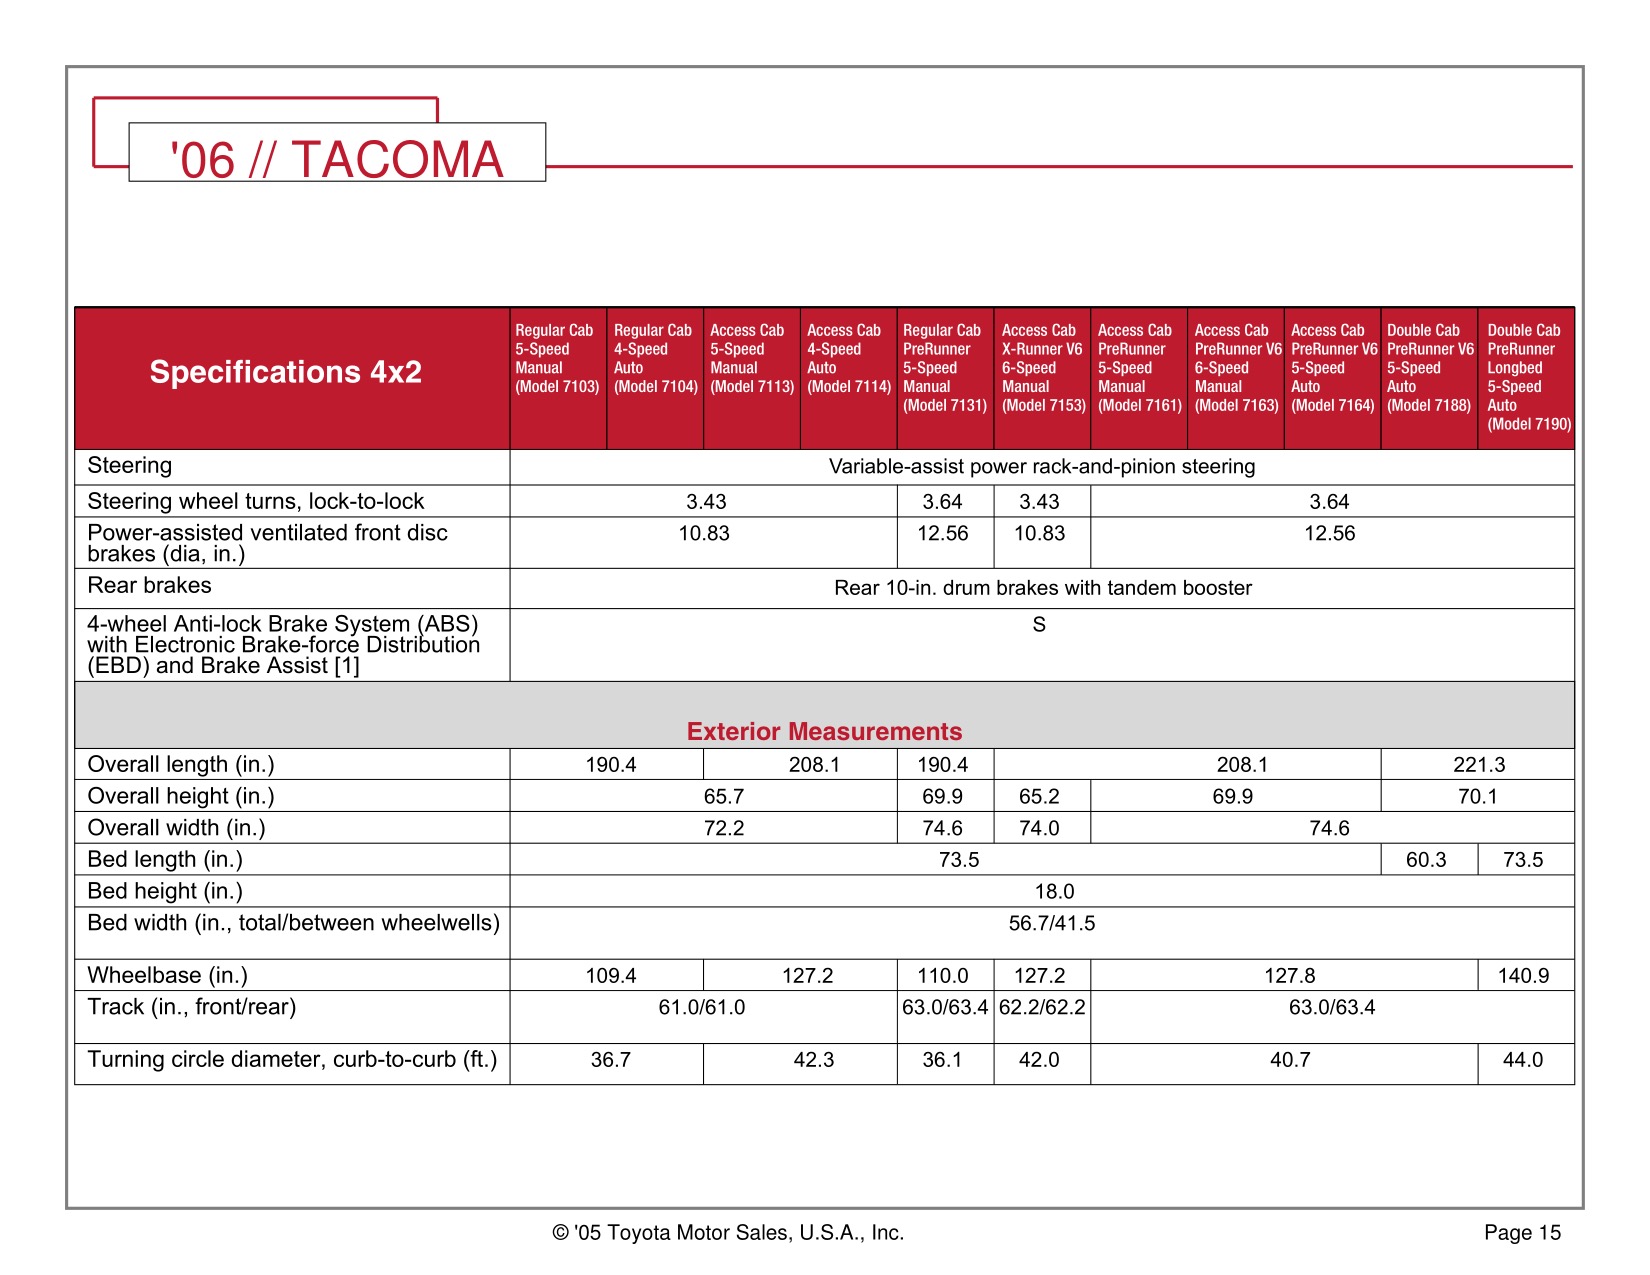 2006 Toyota Tacoma 4x2 Brochure Page 2